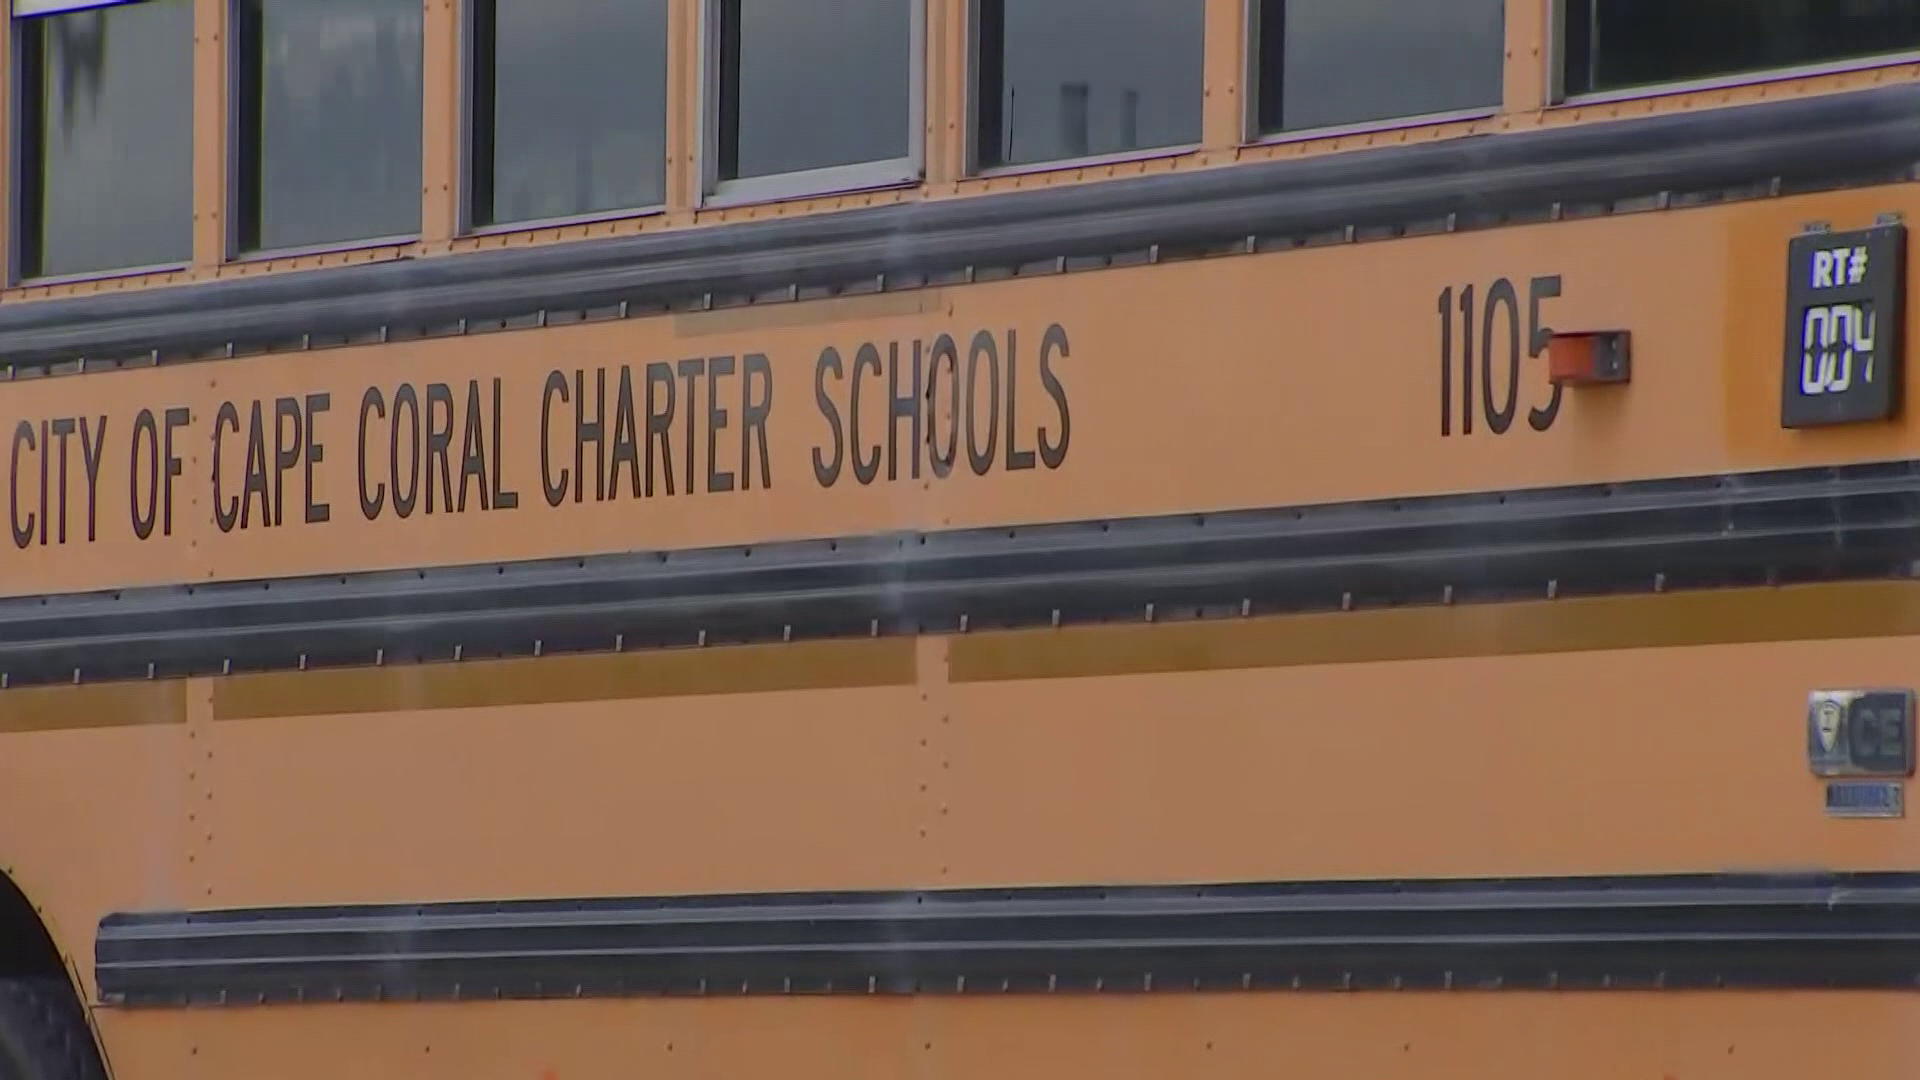 city of cape coral charter schools